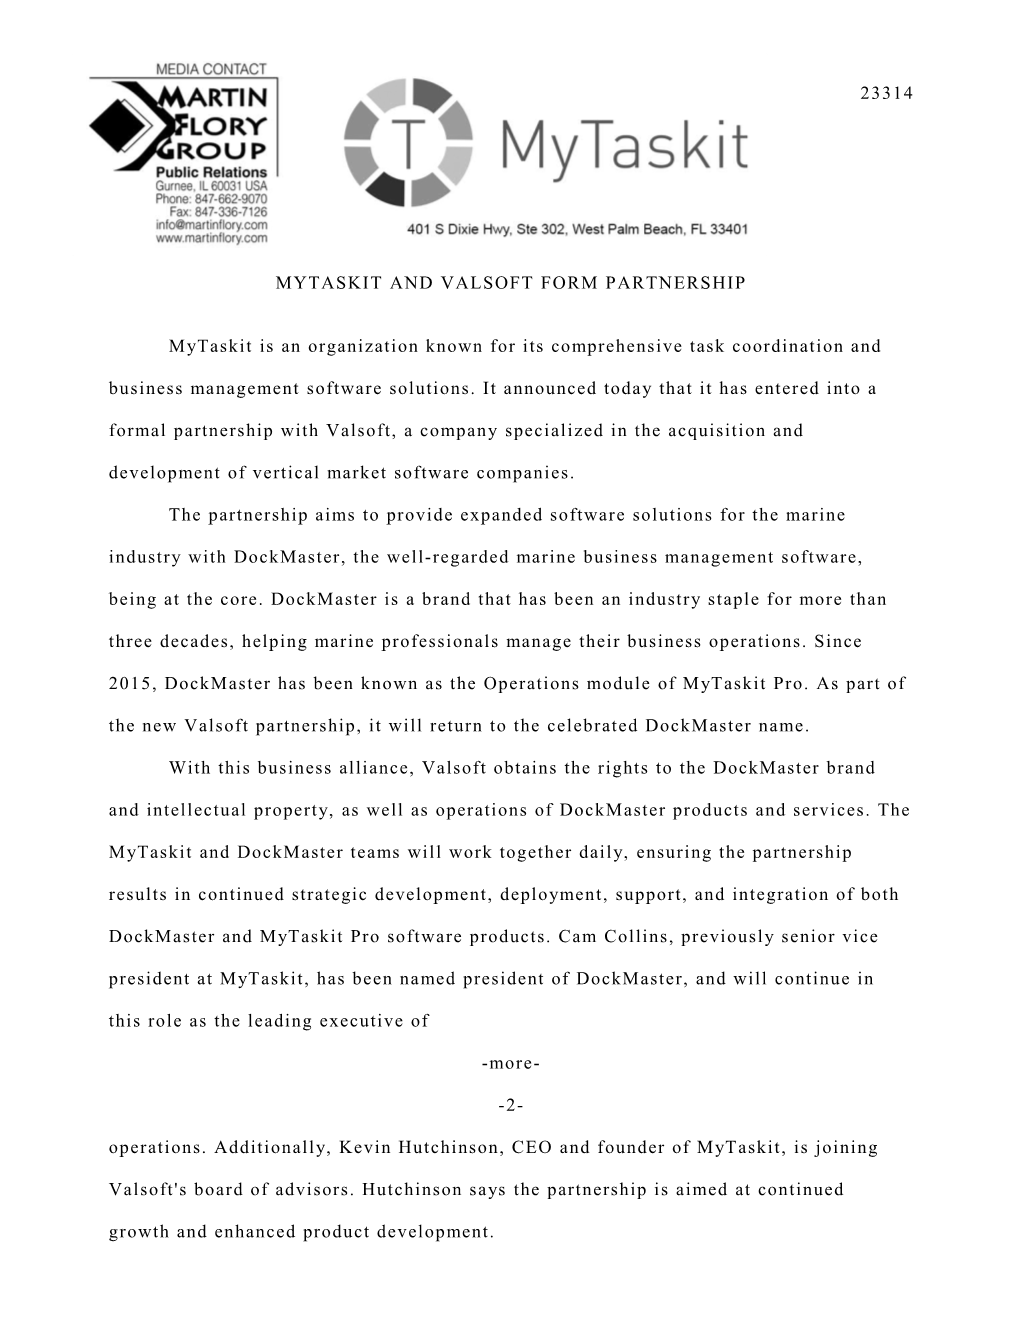 Mytaskit and Valsoft Form Partnership